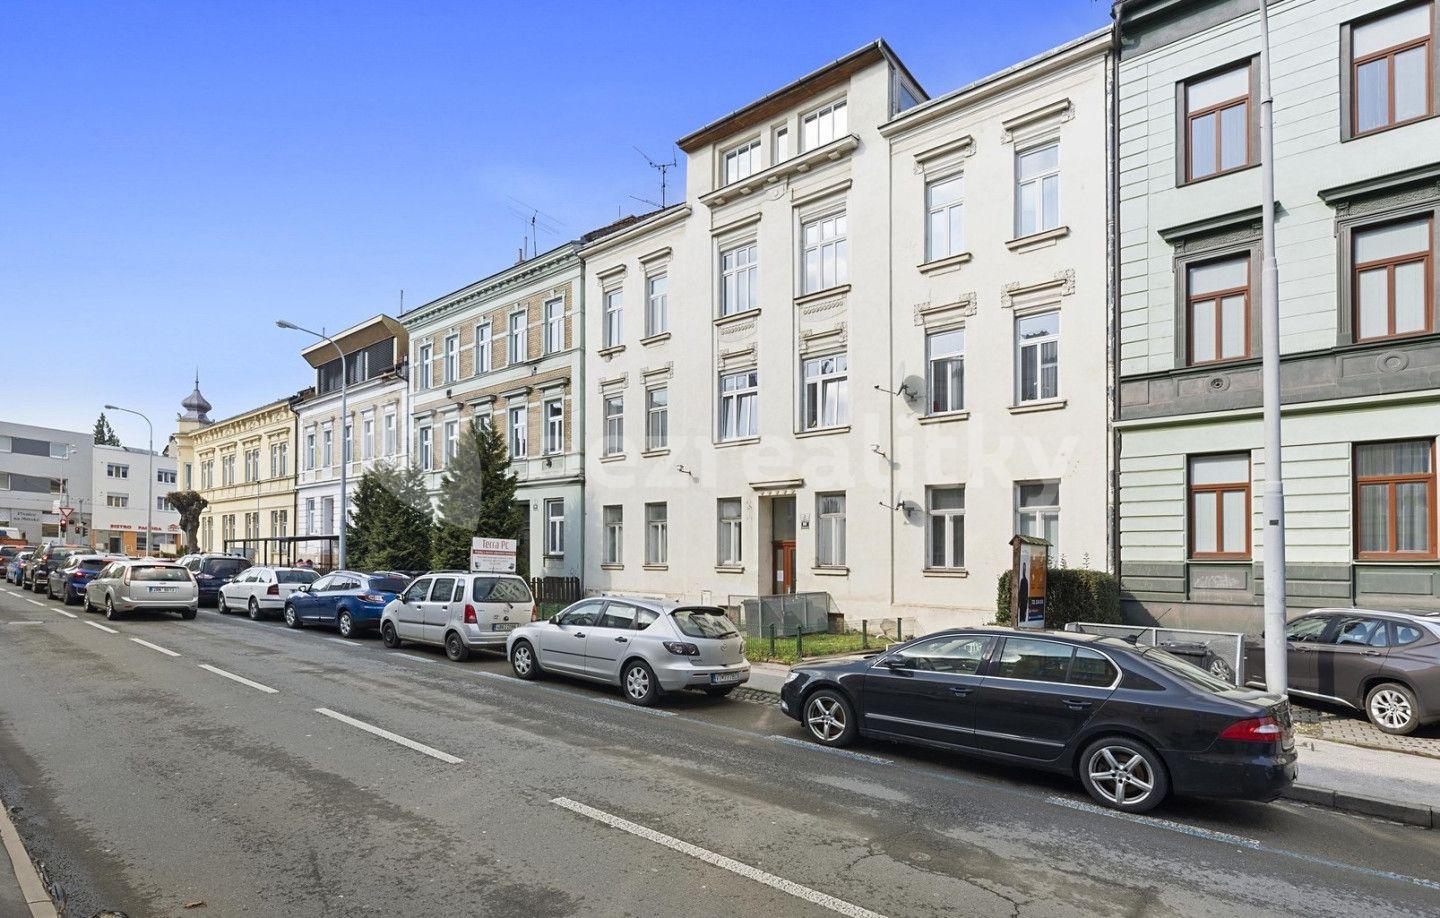 4 bedroom flat for sale, 142 m², Tábor, Brno, Jihomoravský Region